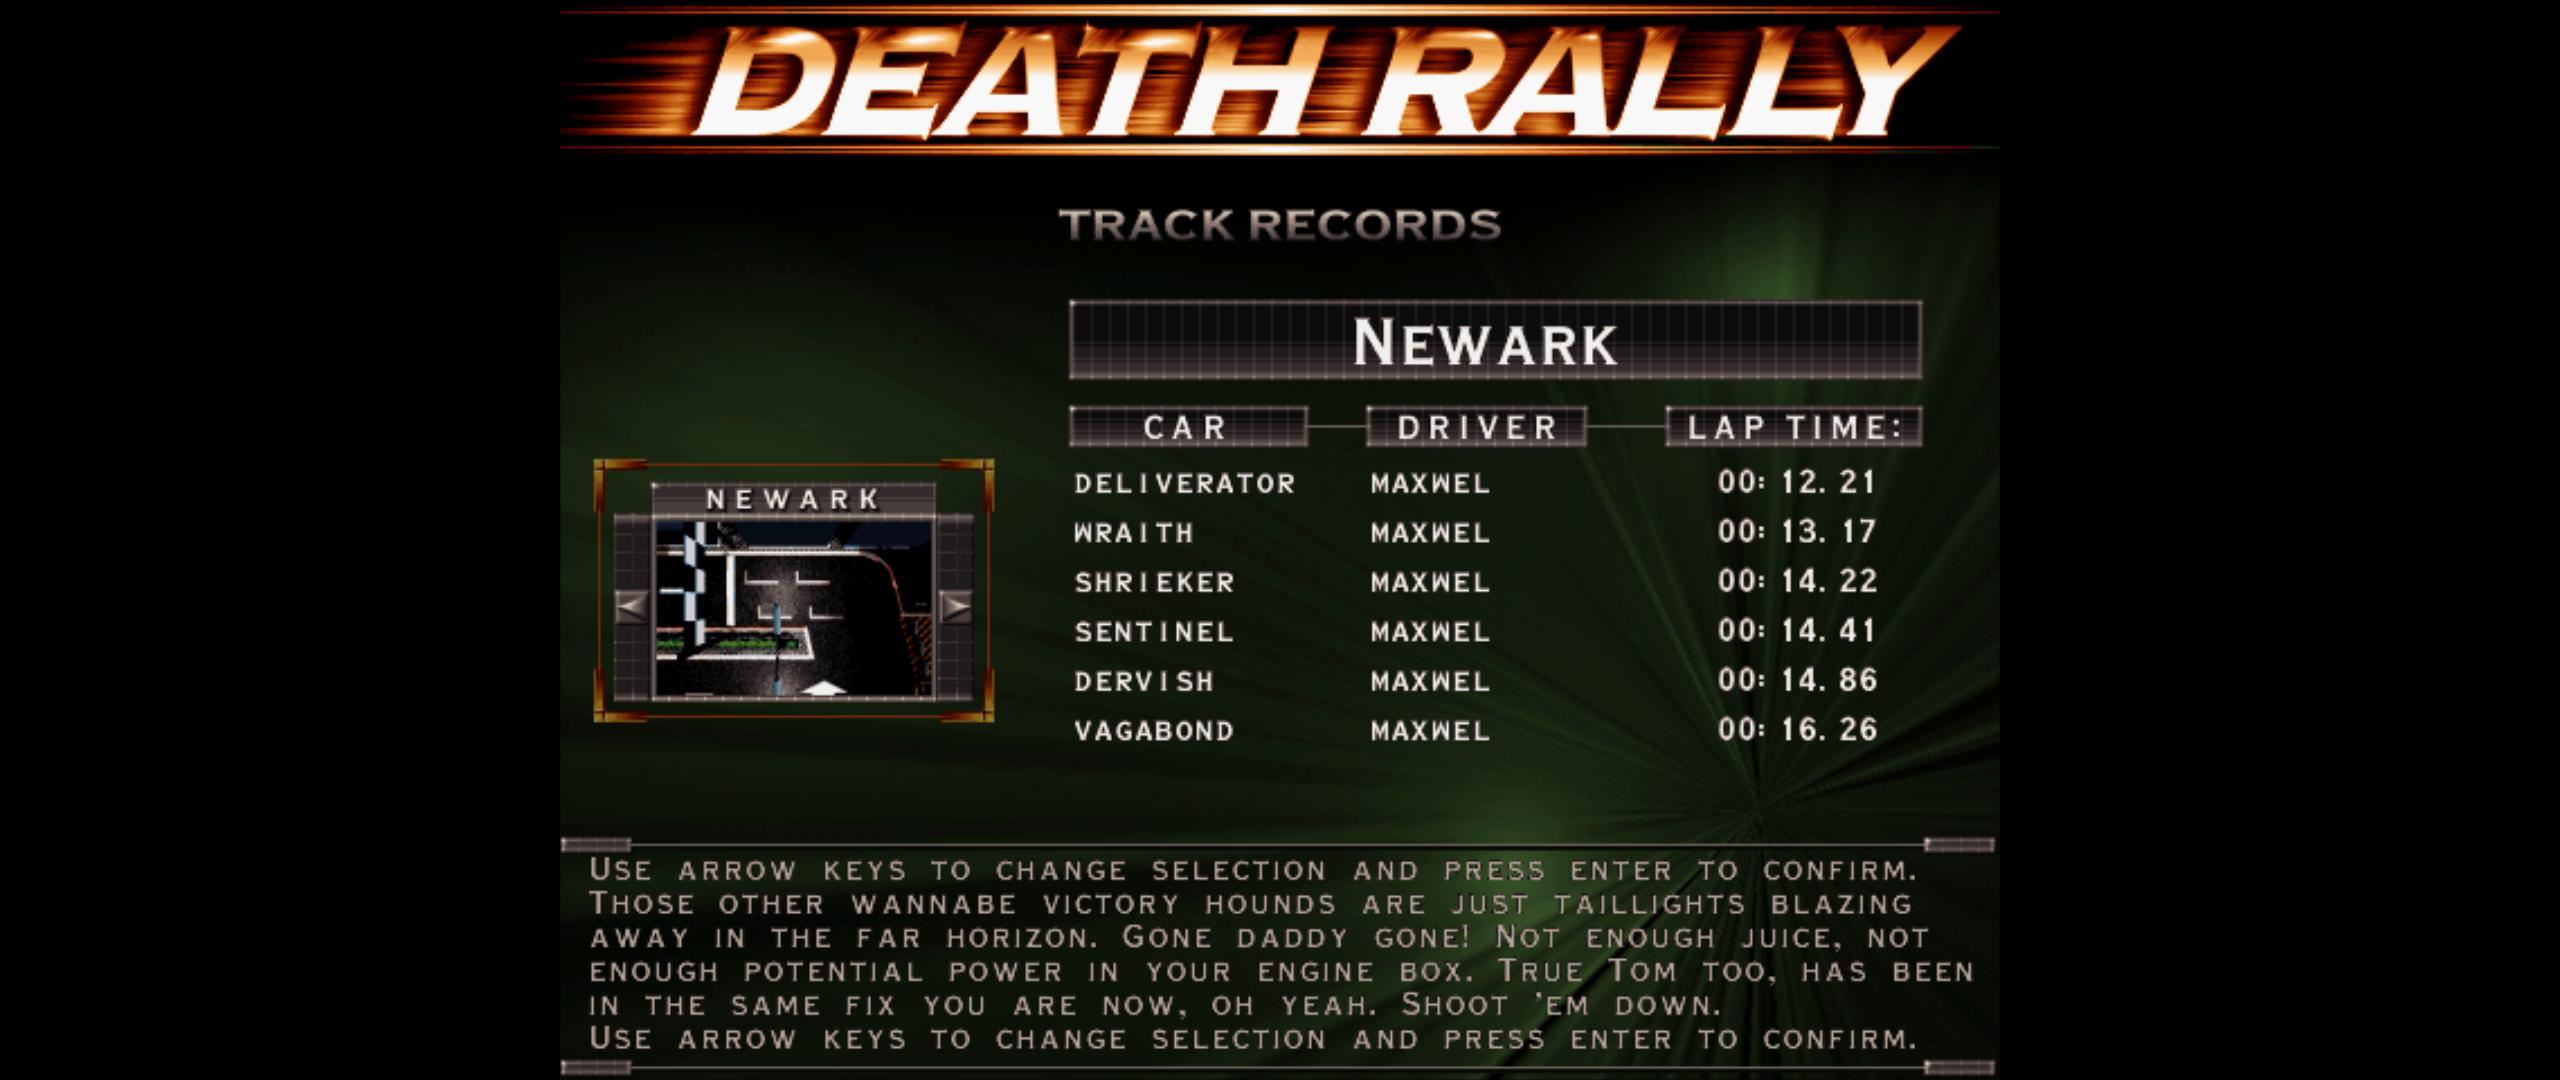 Maxwel: Death Rally [New Ark, Sentinel Car] (PC) 0:00:14.41 points on 2016-03-04 07:00:25